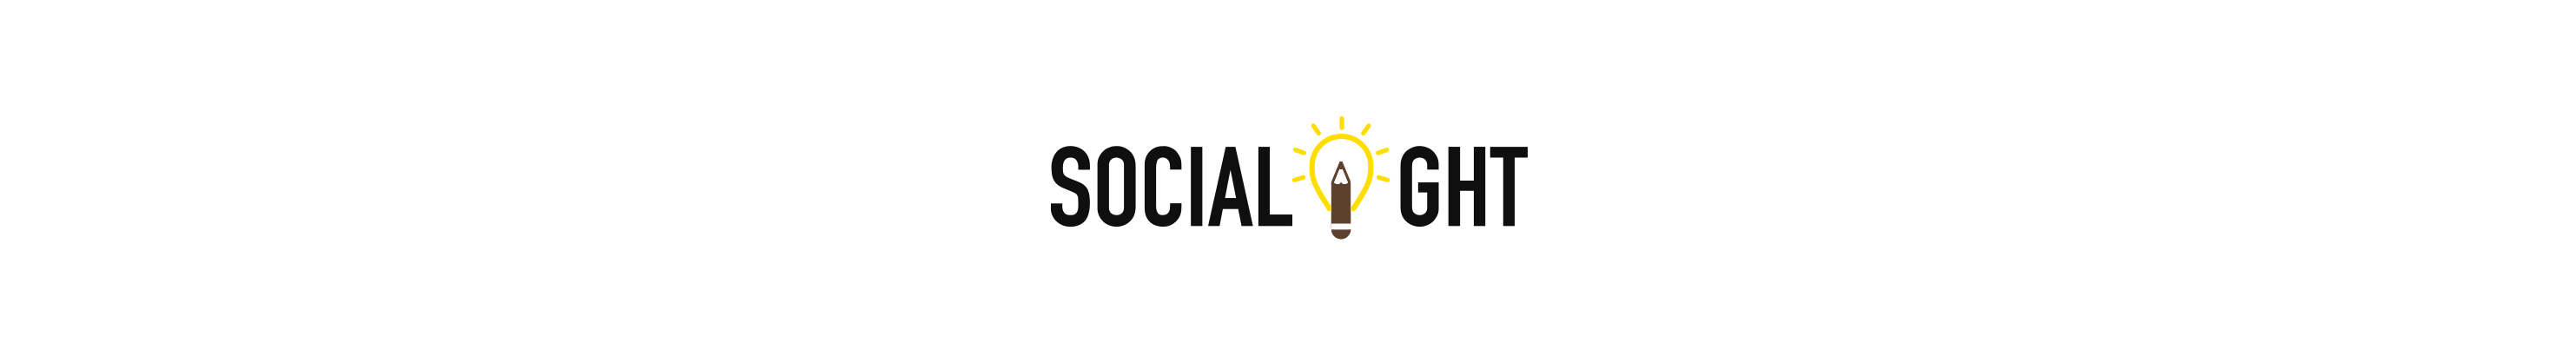 Socialight India's profile banner